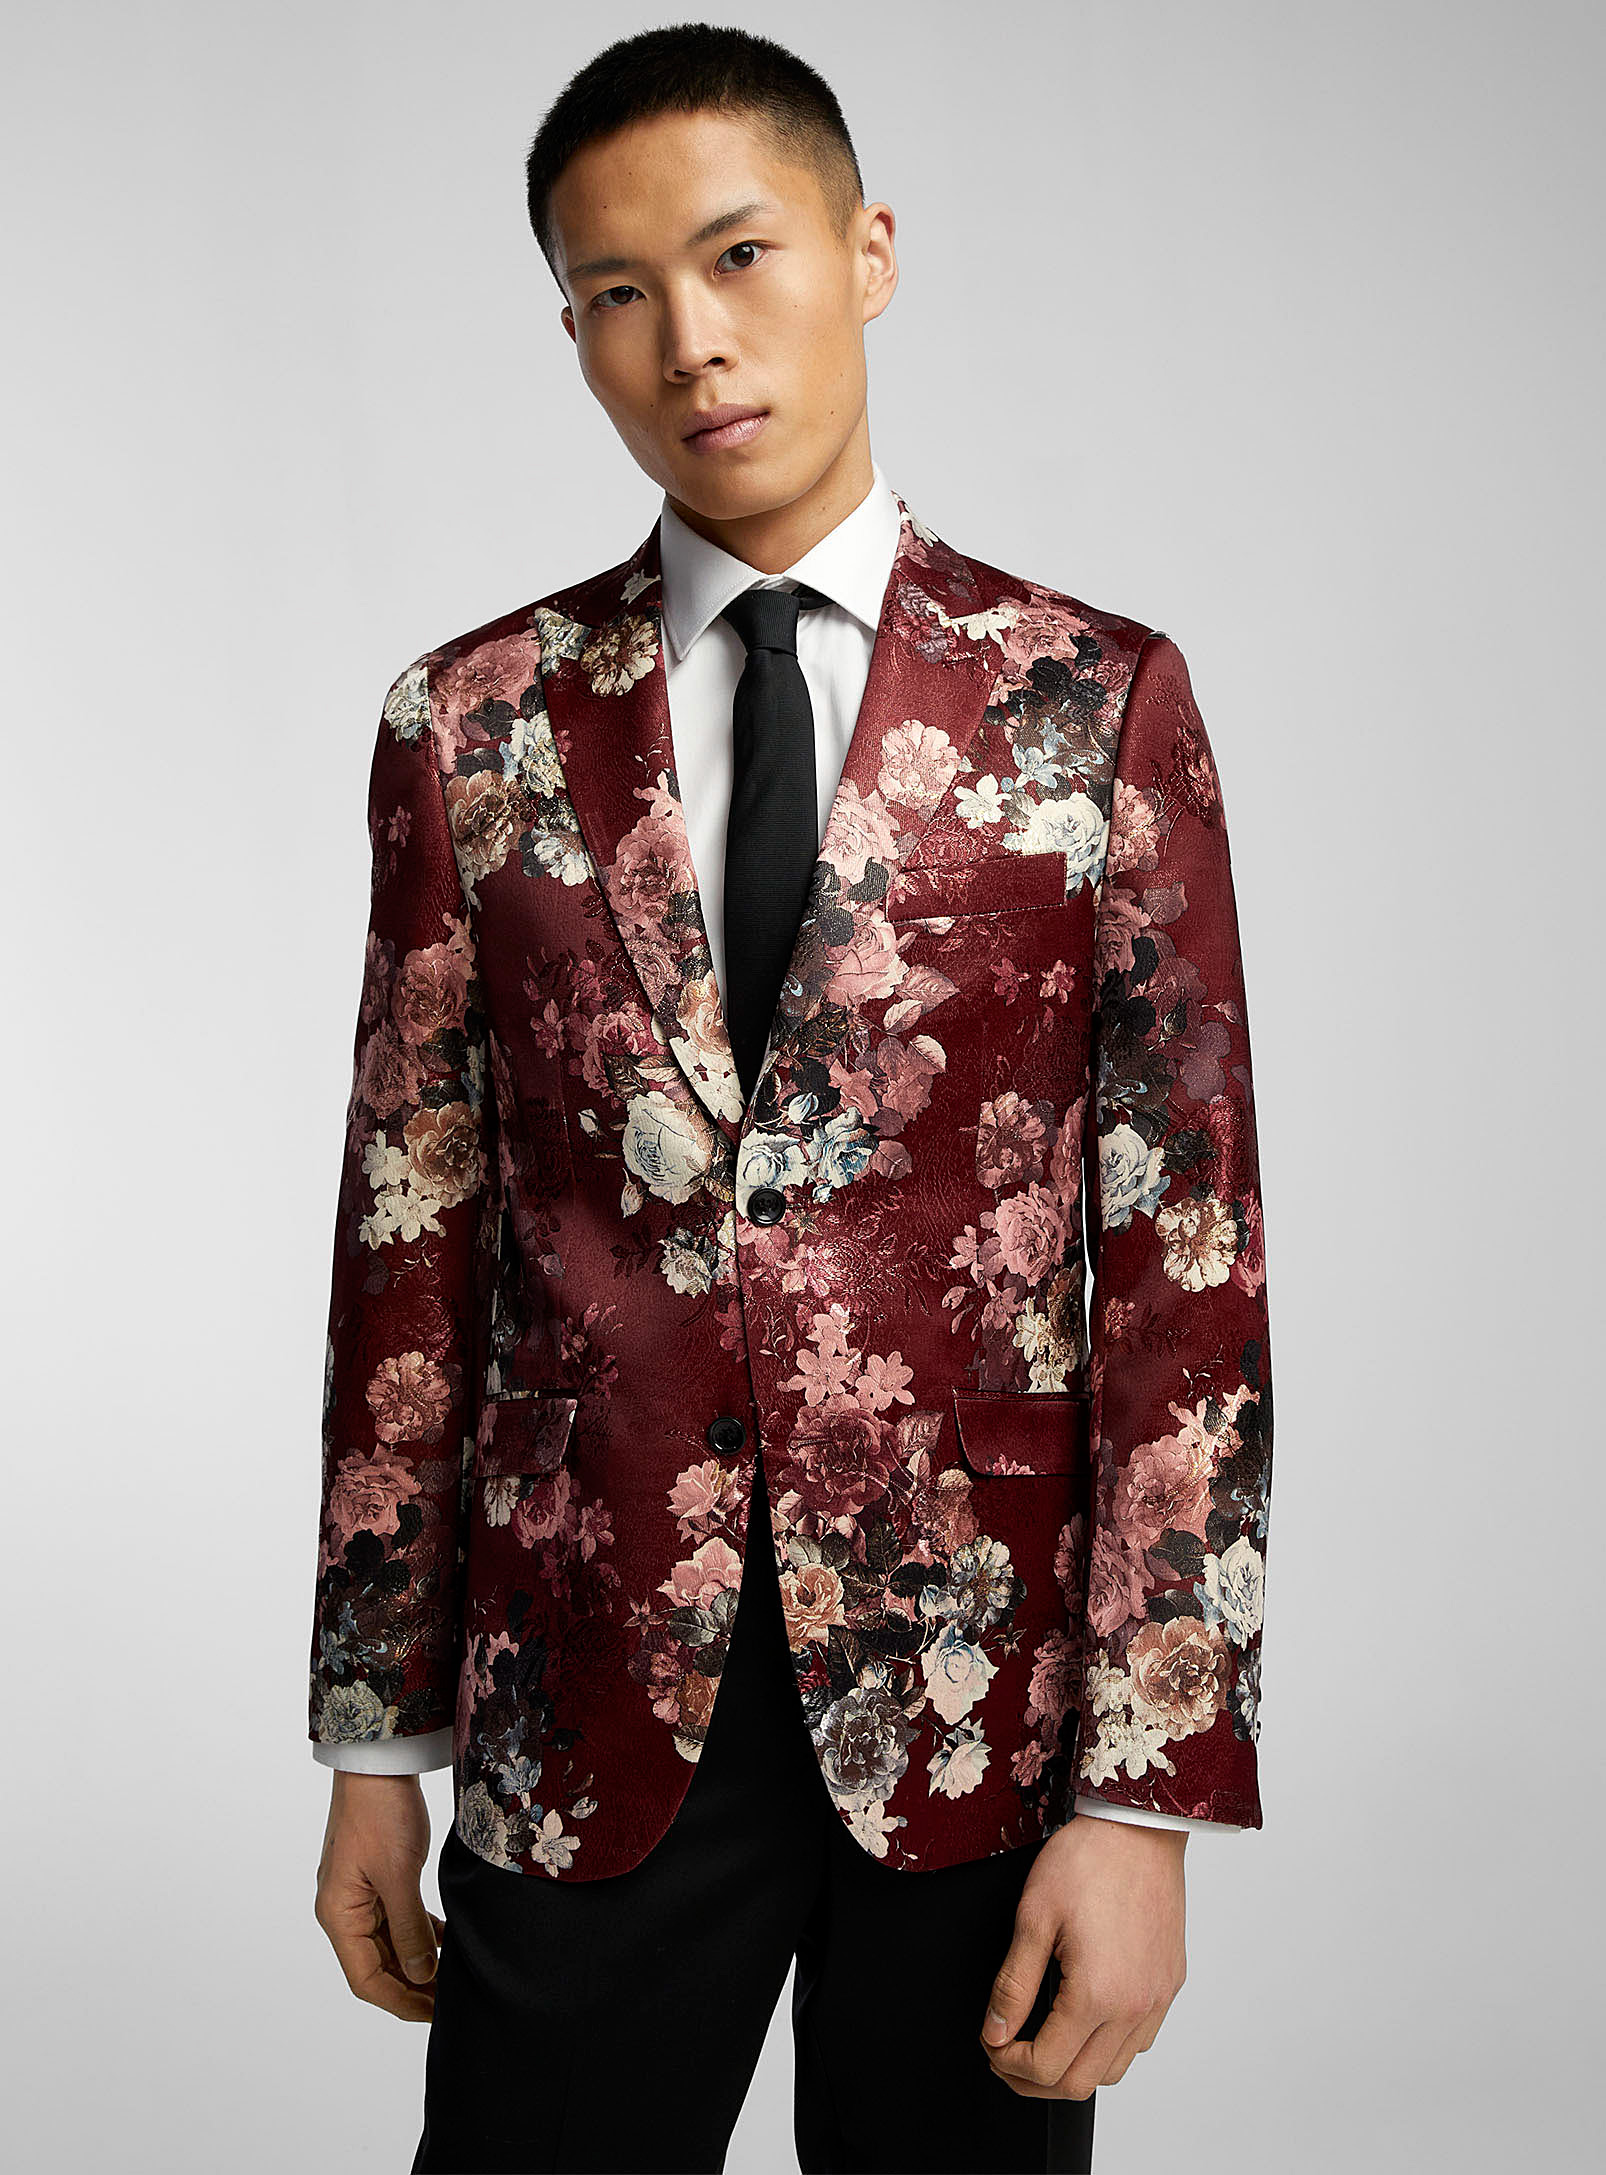 Soul of London - Men's Shiny floral jacquard jacket Slim fit